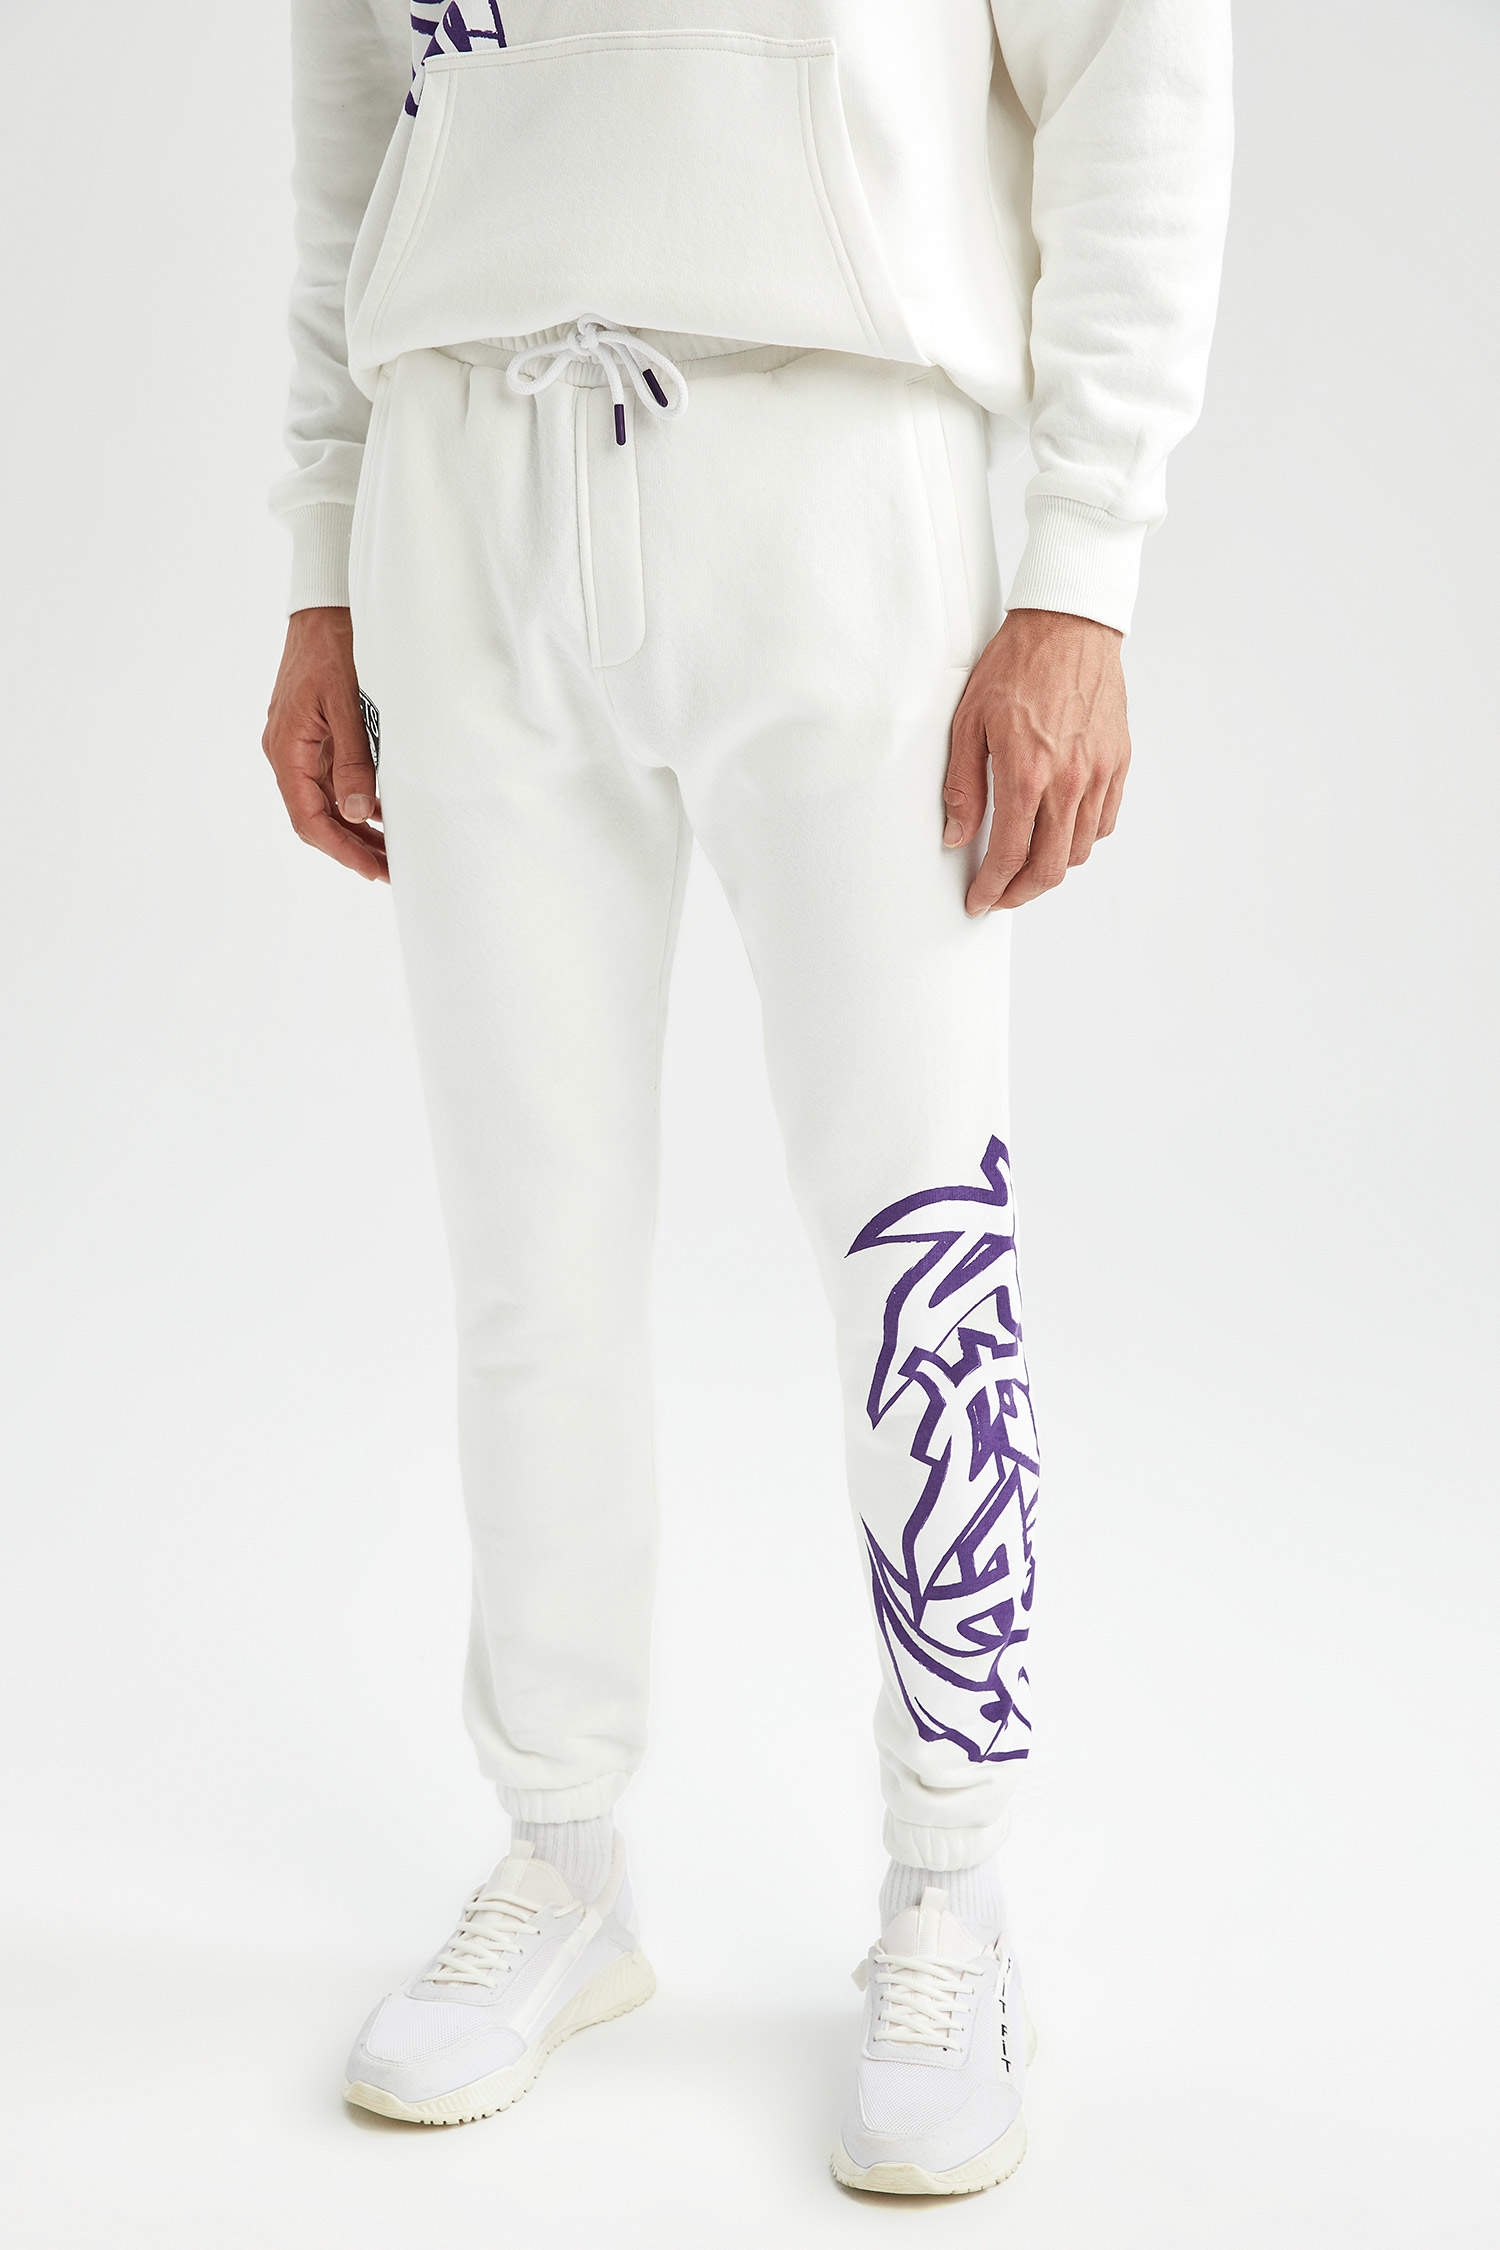 Ecru Man Brooklyn Nets Licensed Thick Sweatshirt Fabric Jogger